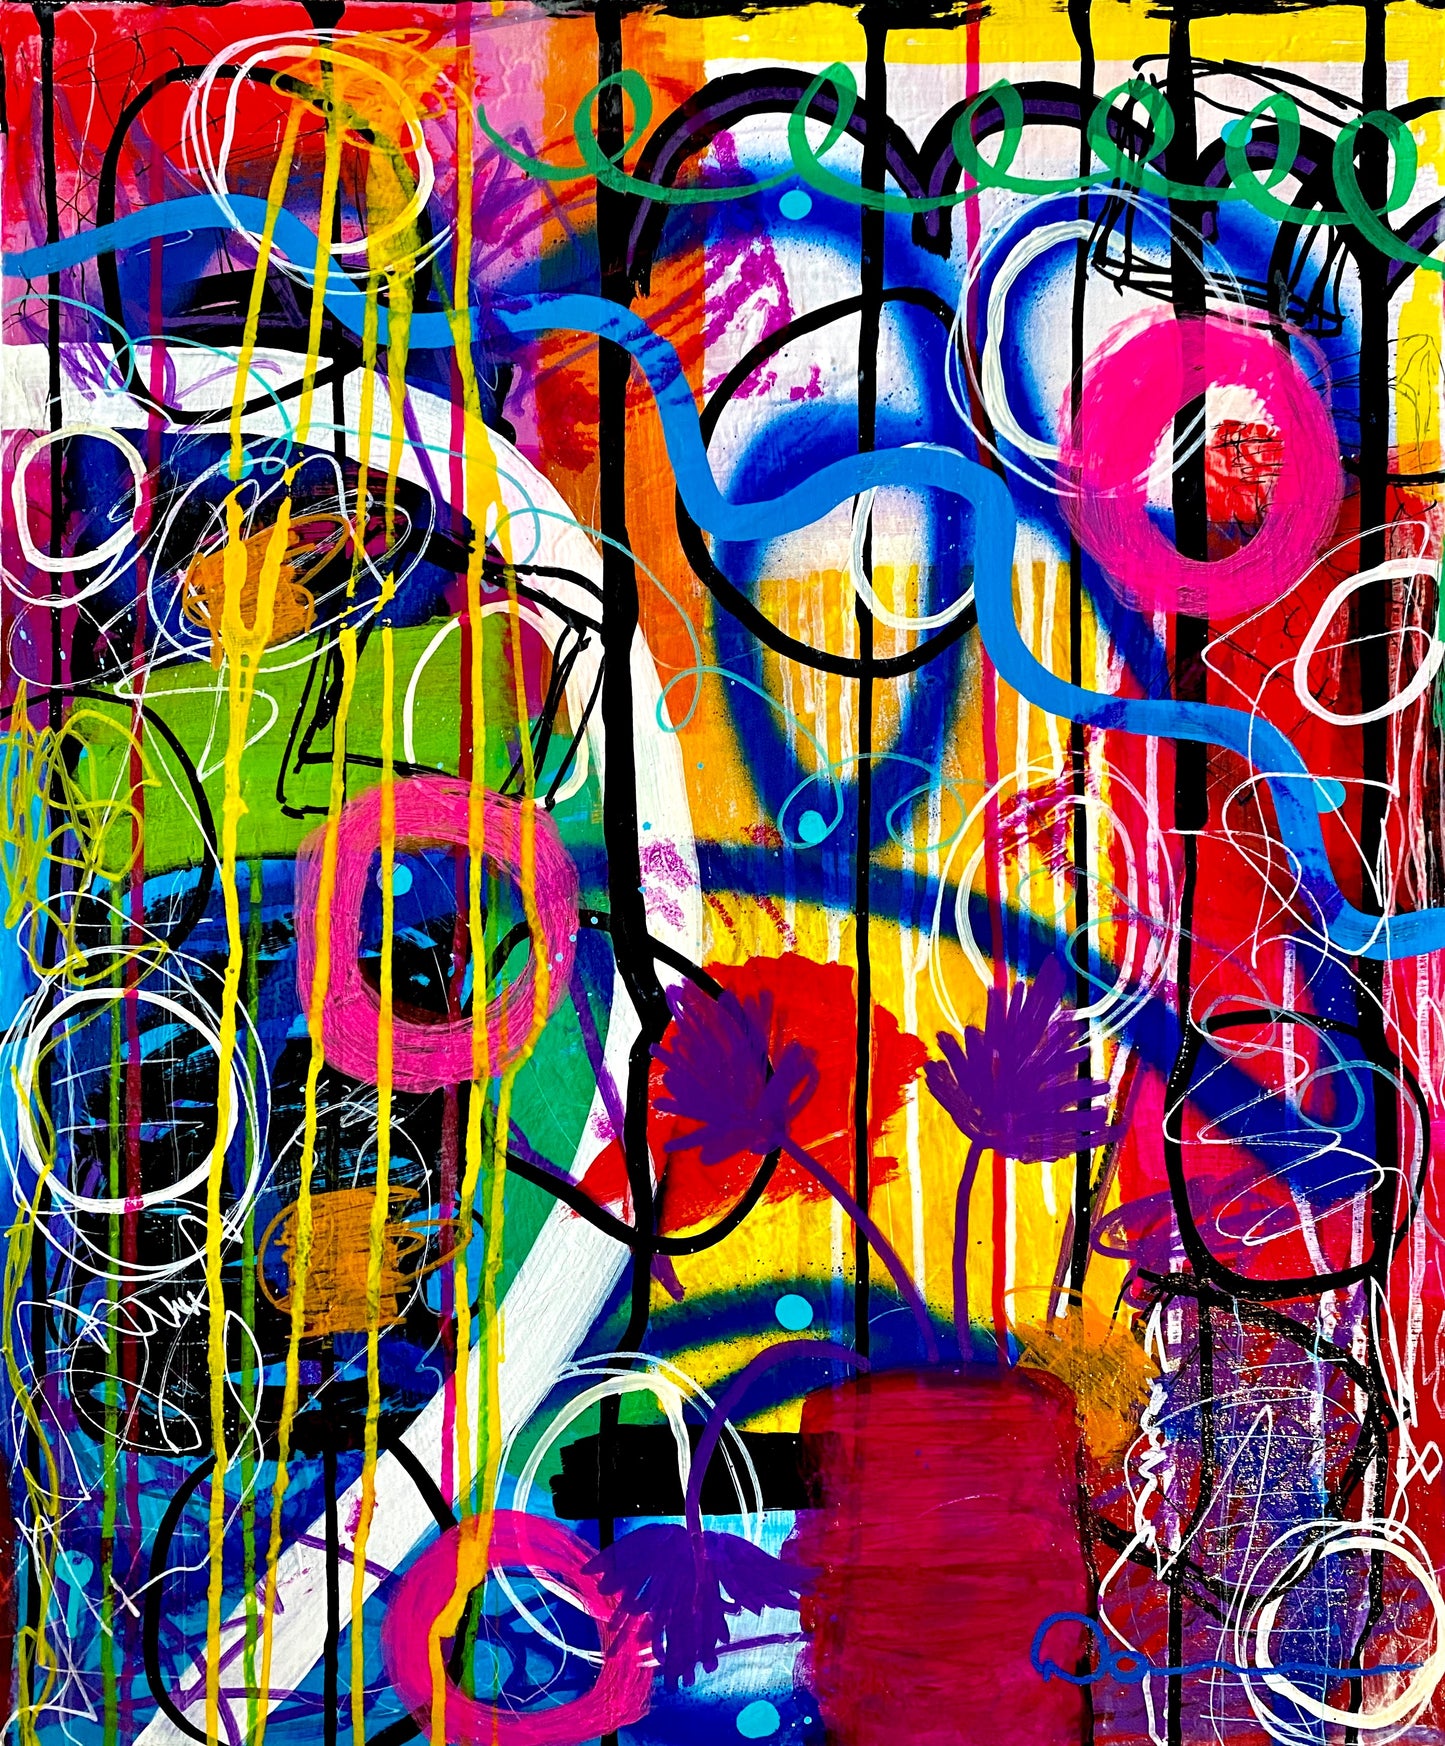 I Finally Bloomed (20x24) -Abstract Mixed media graffiti style canvas painting